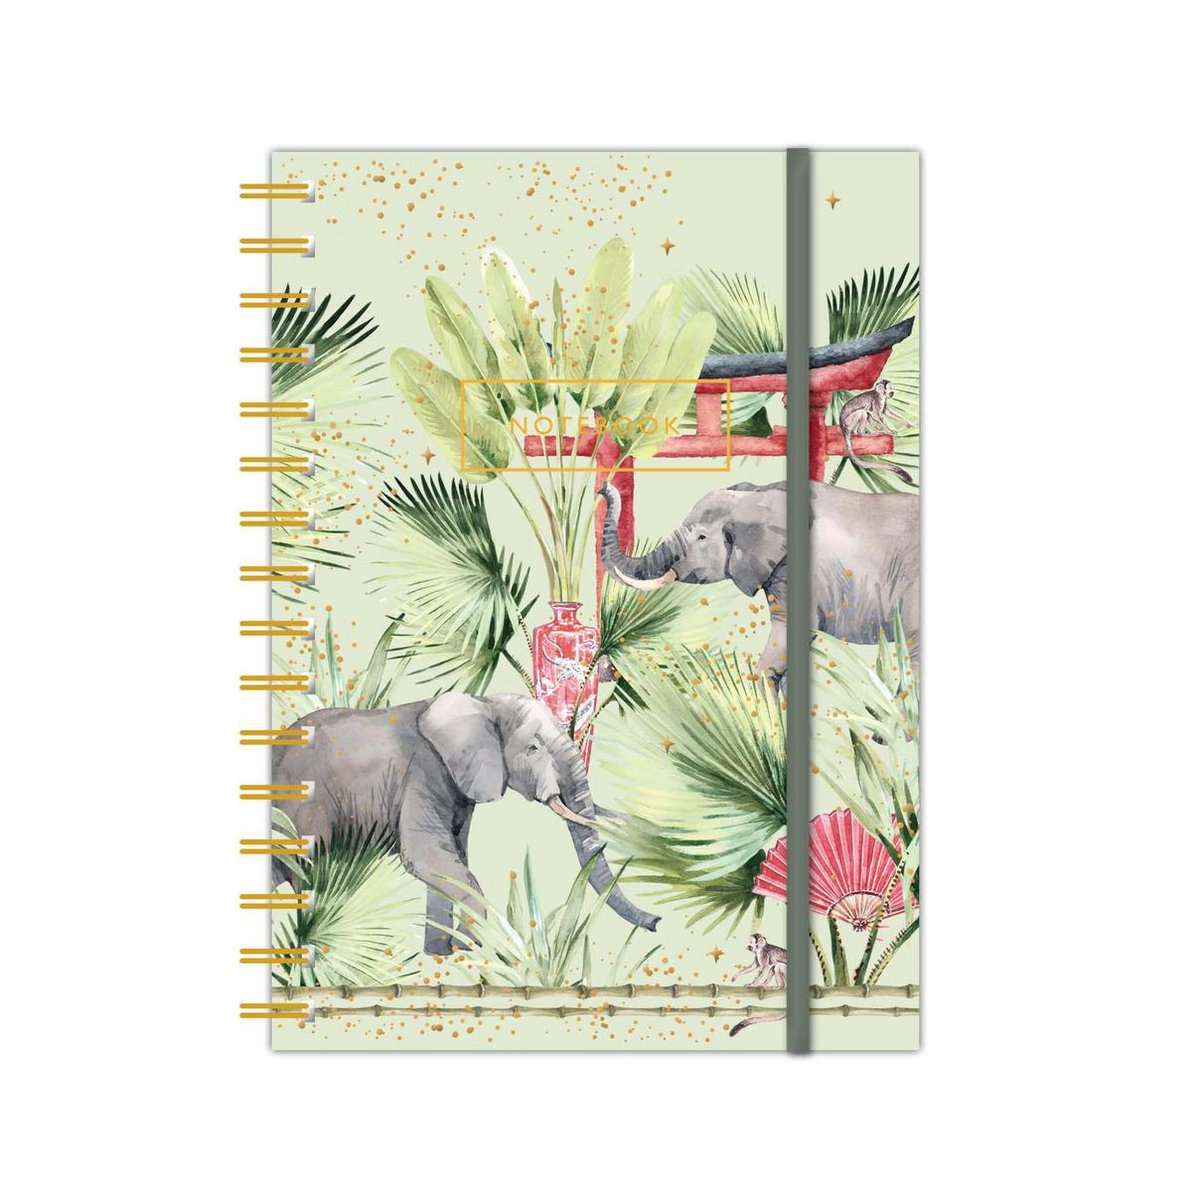 Creative Lab Amsterdam stationery - Notitieboek - Rituals Elephant design - A6 formaat